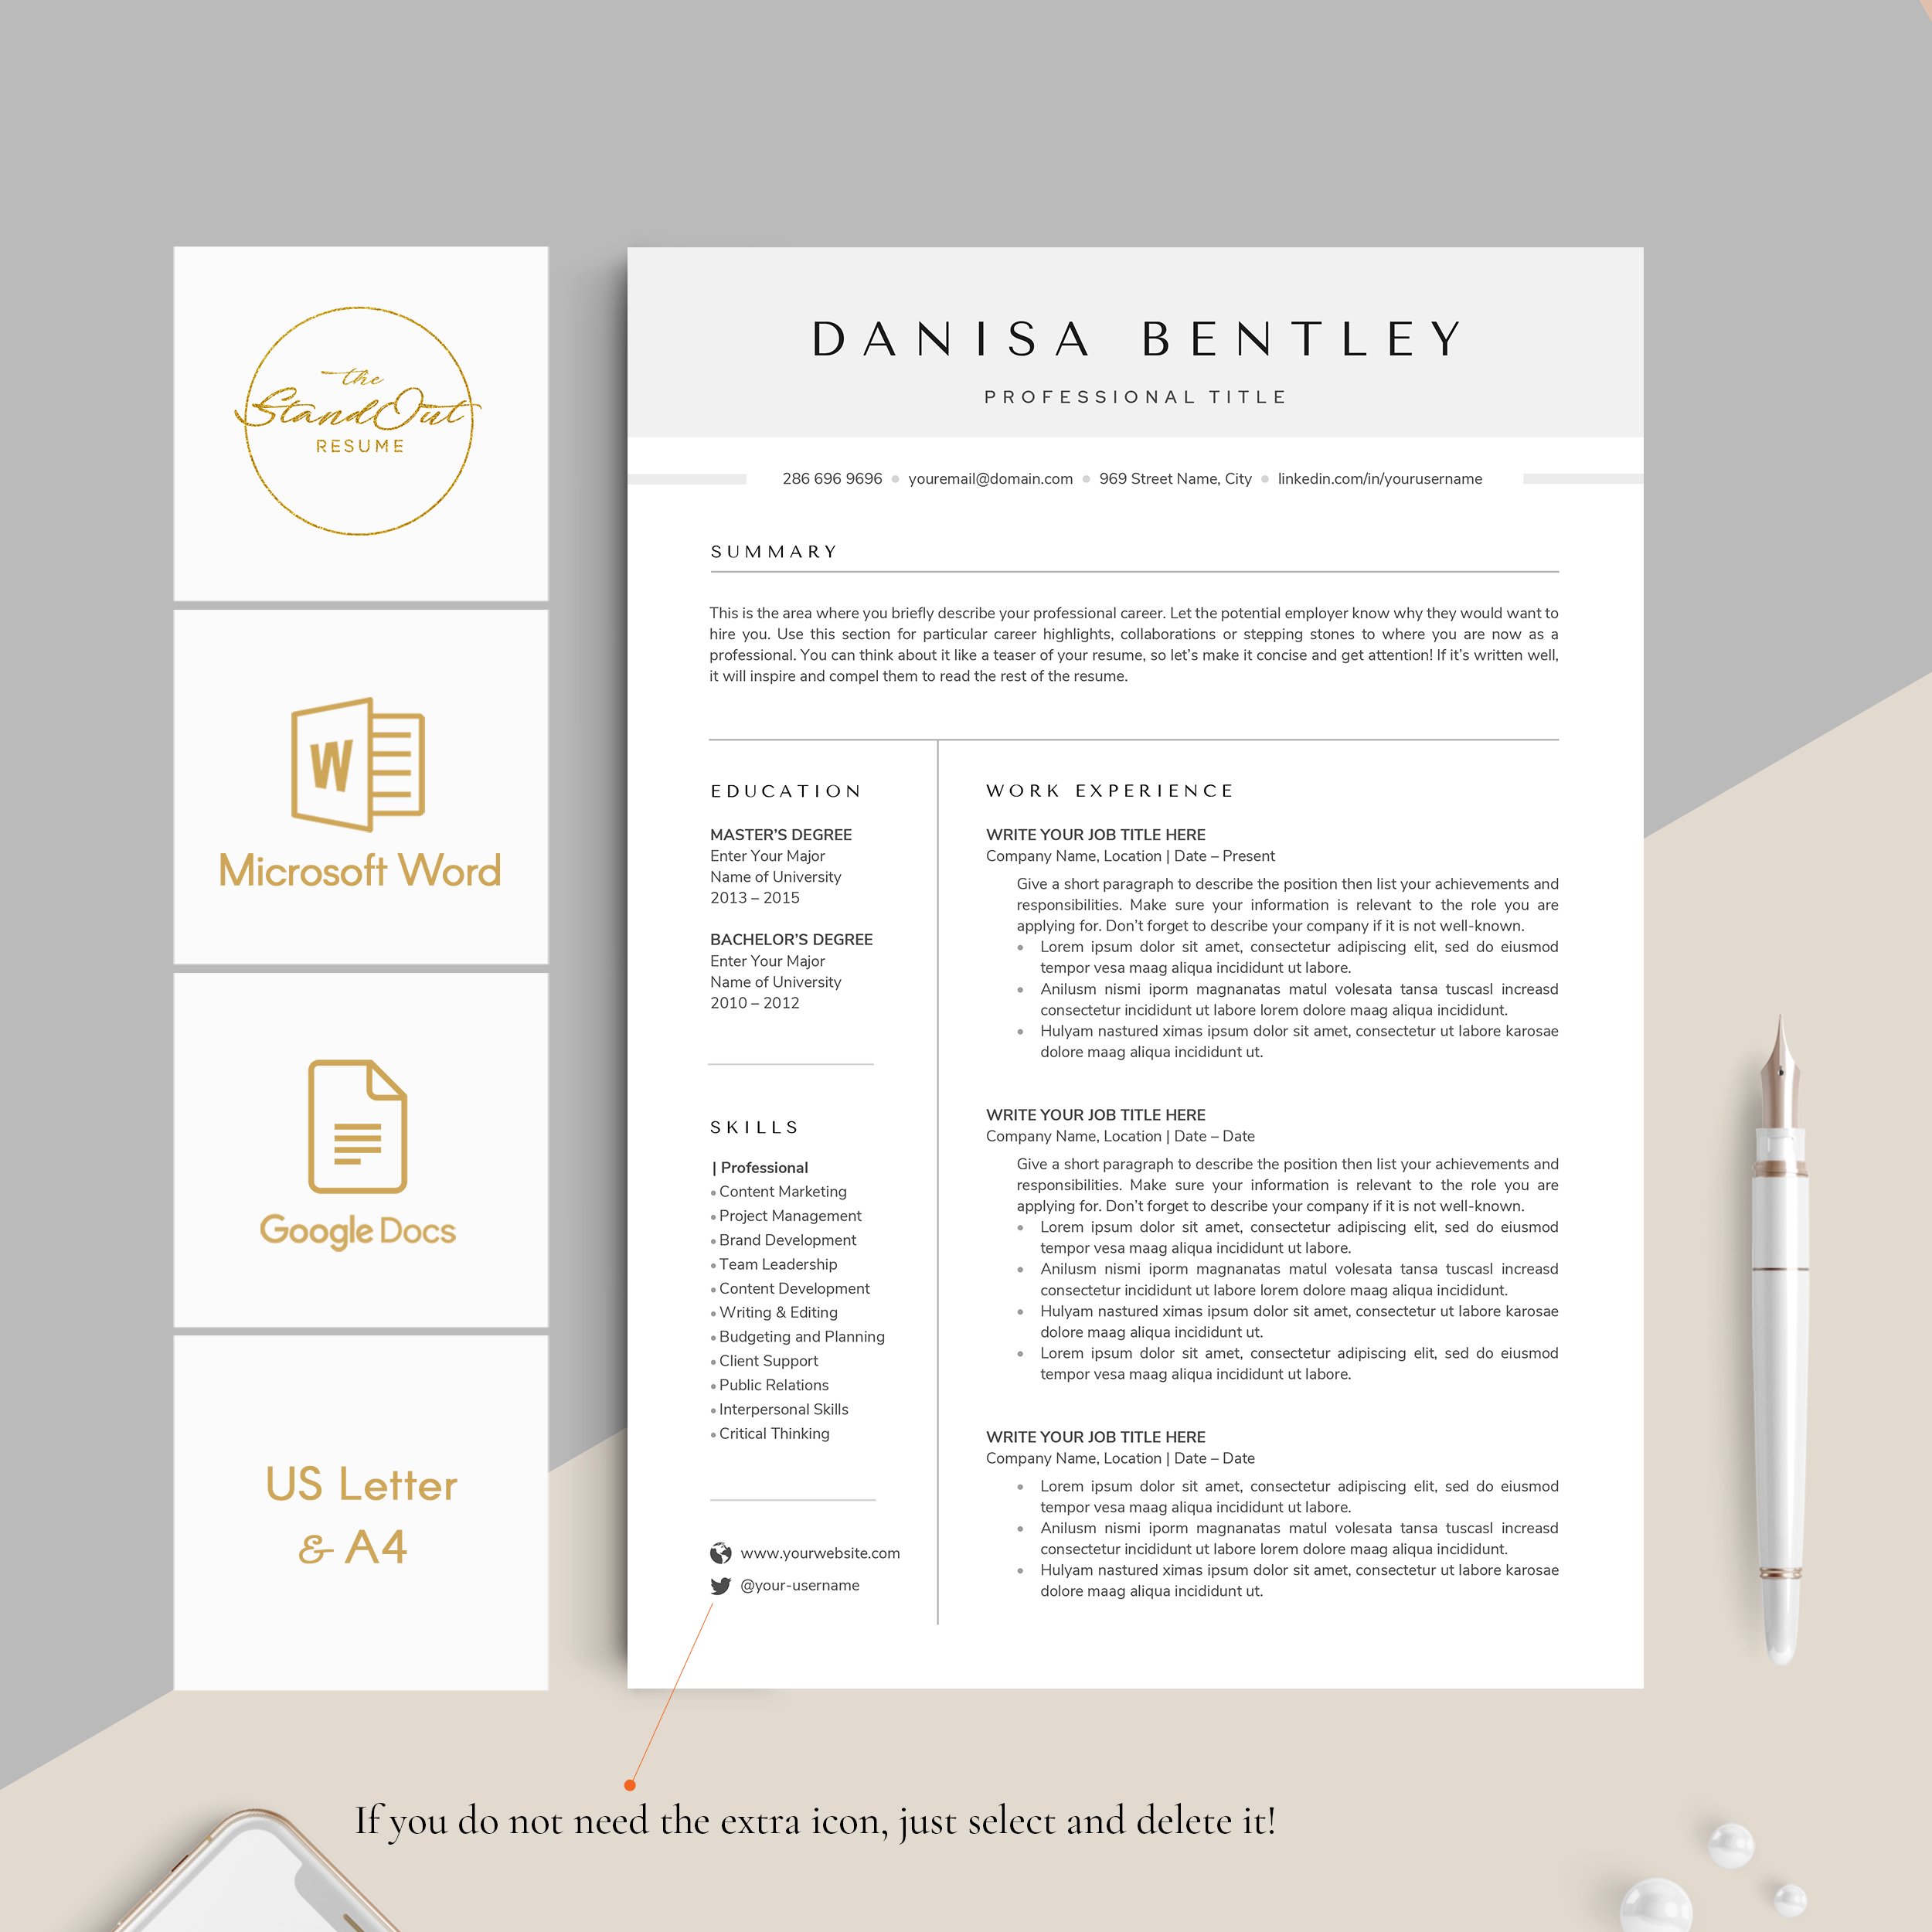 Resume/CV Template - BENTLEY preview image.